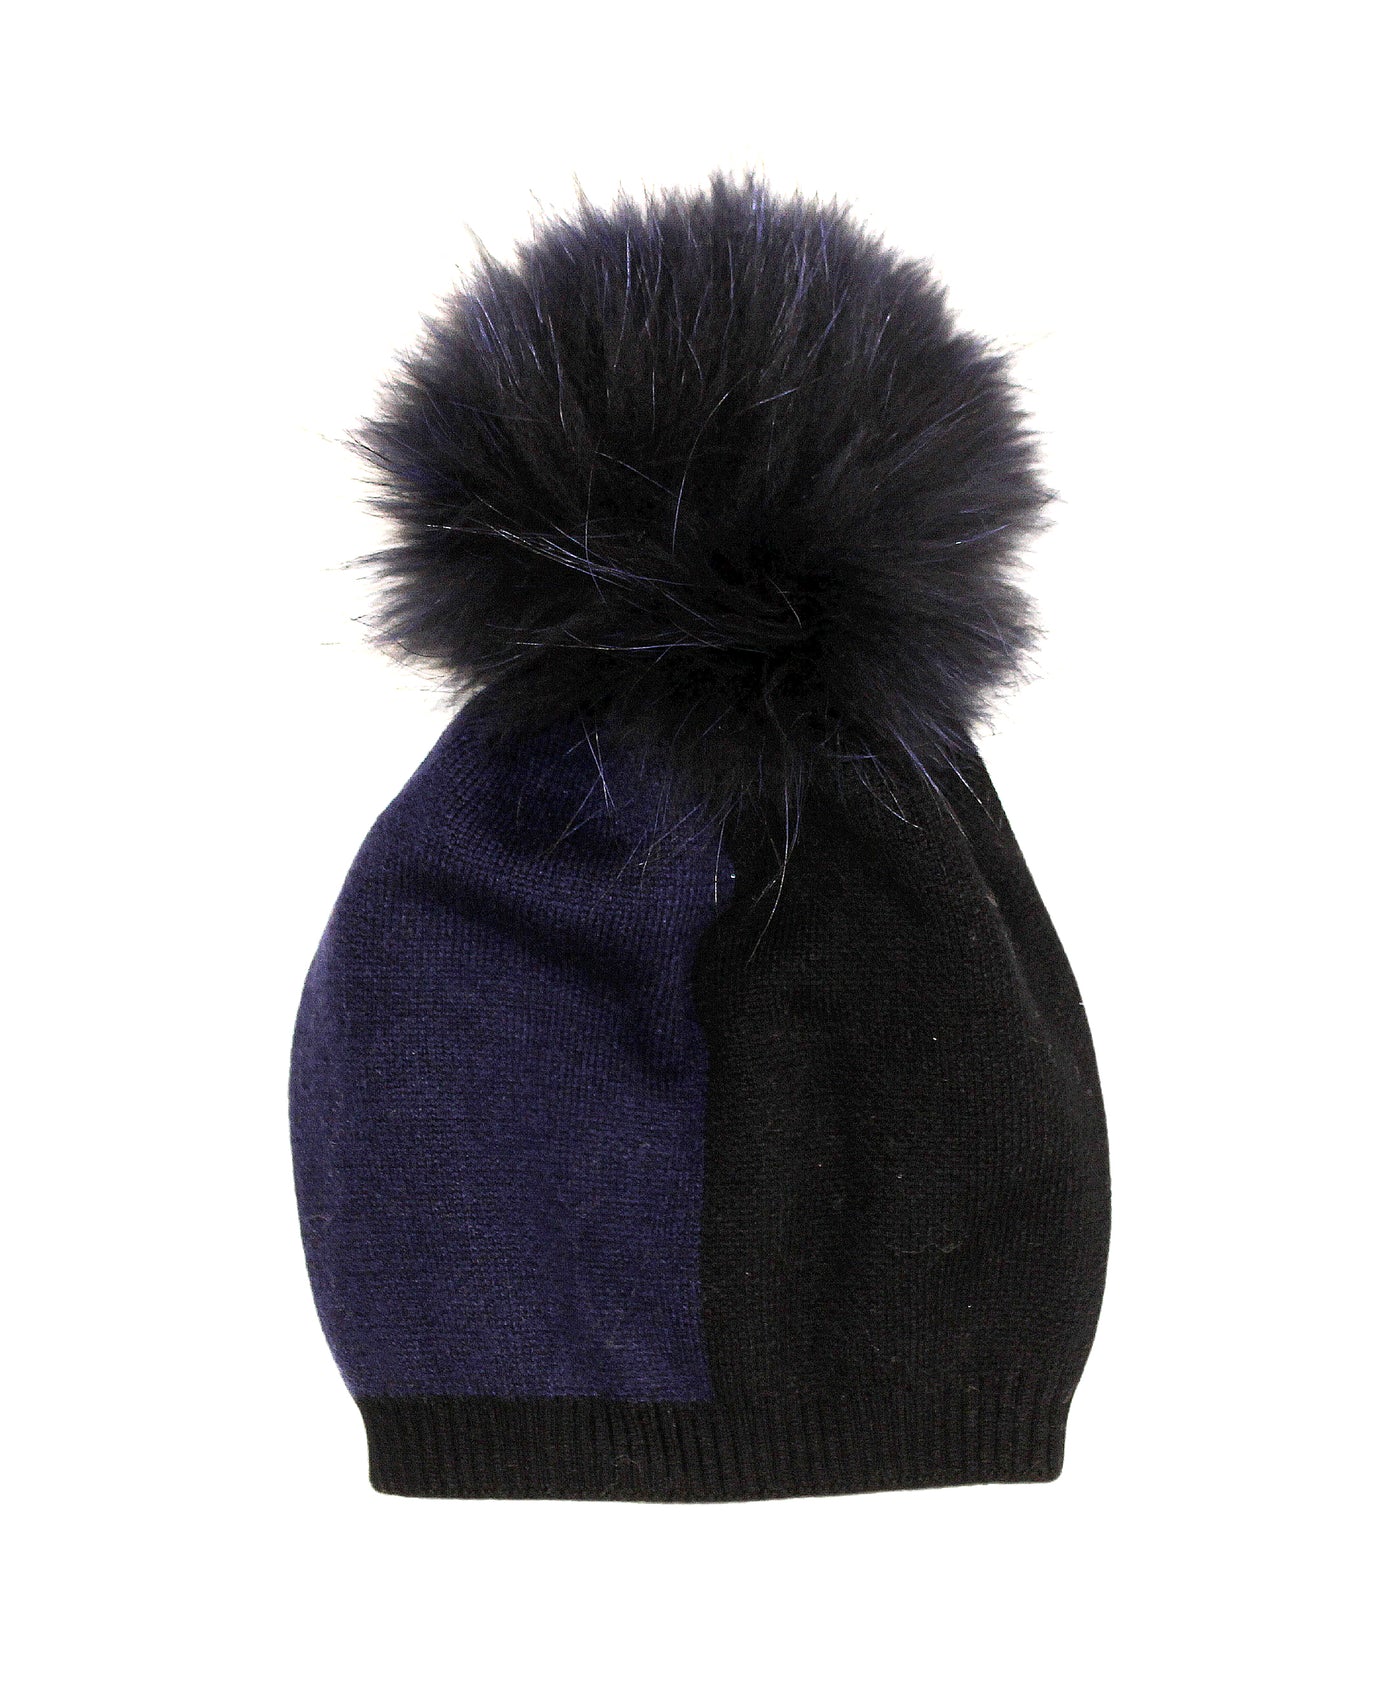 Colorblock Knit Hat w/ Fur Pom image 1